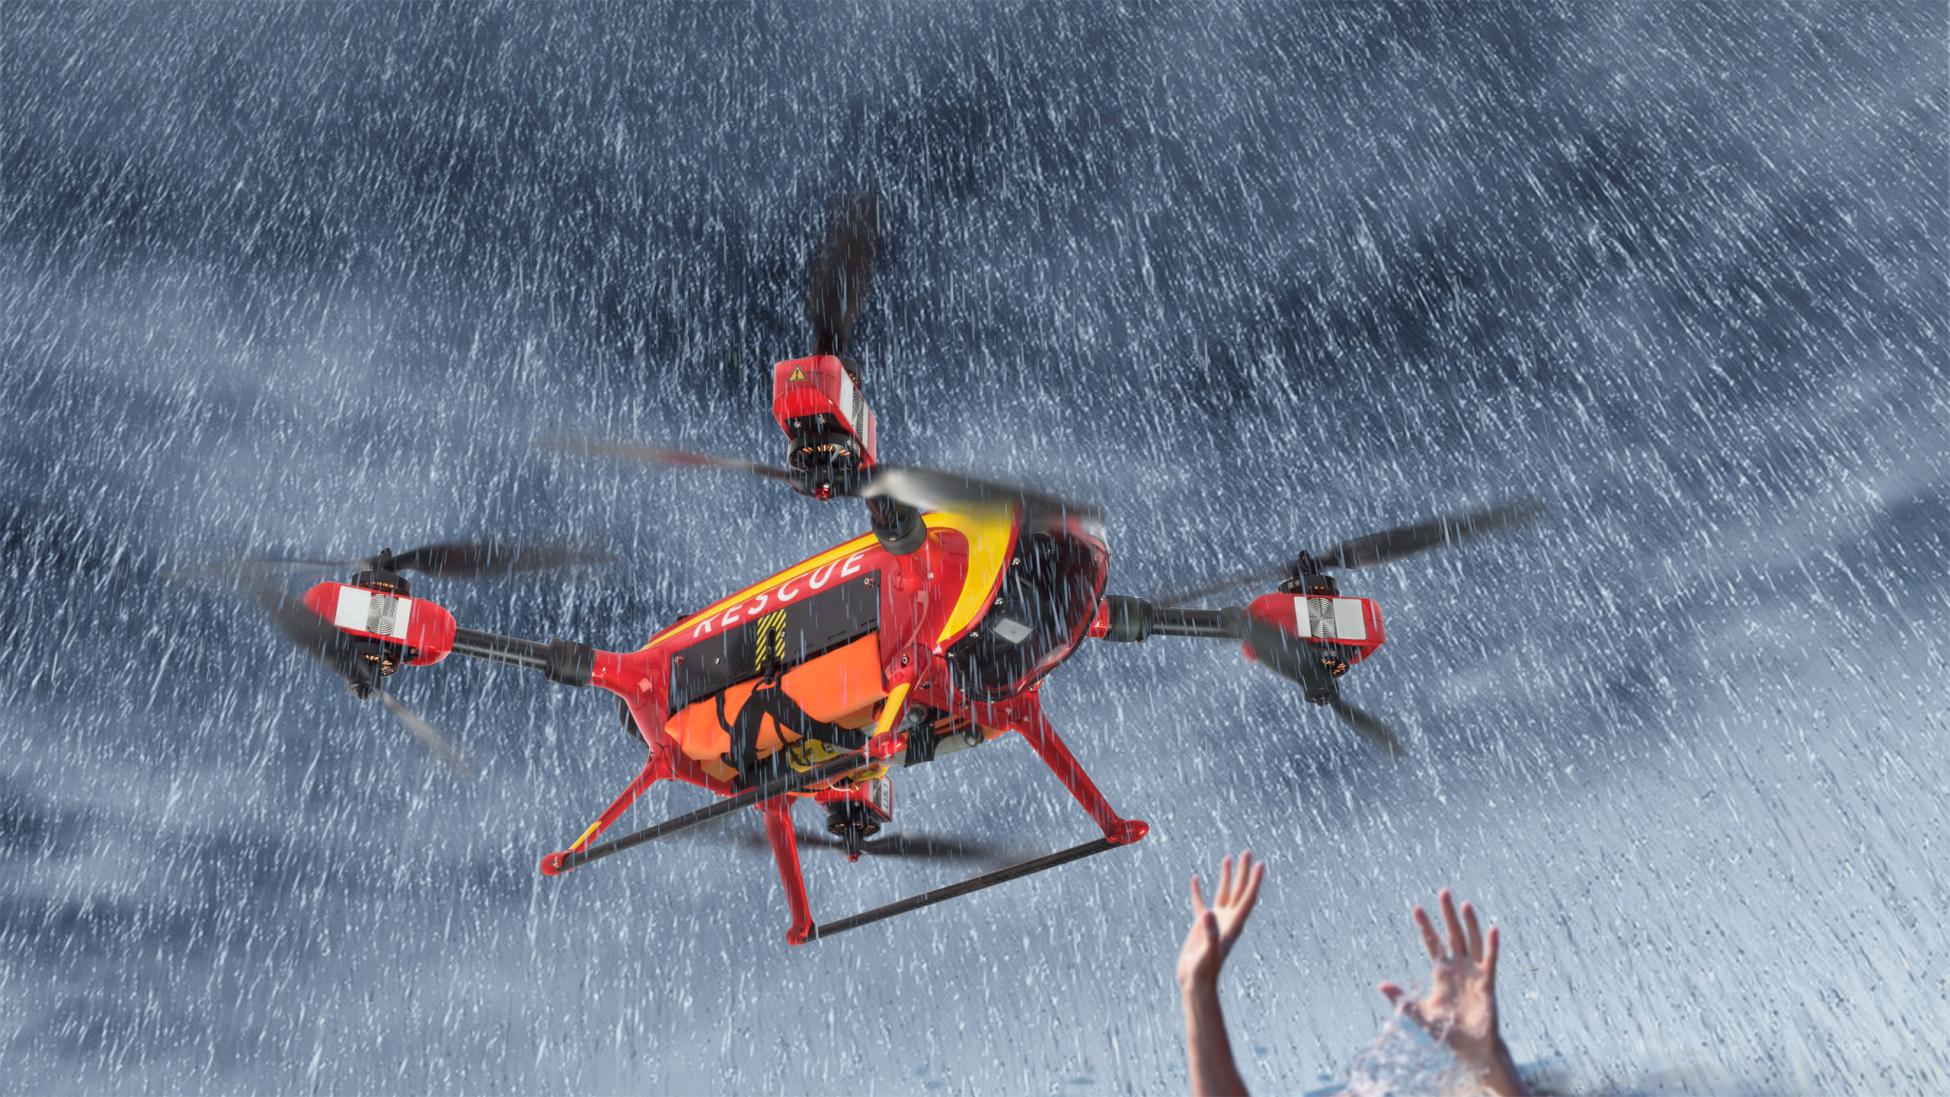 The Auxdron Lifeguard Drone. Image Credit: GeneralDrones